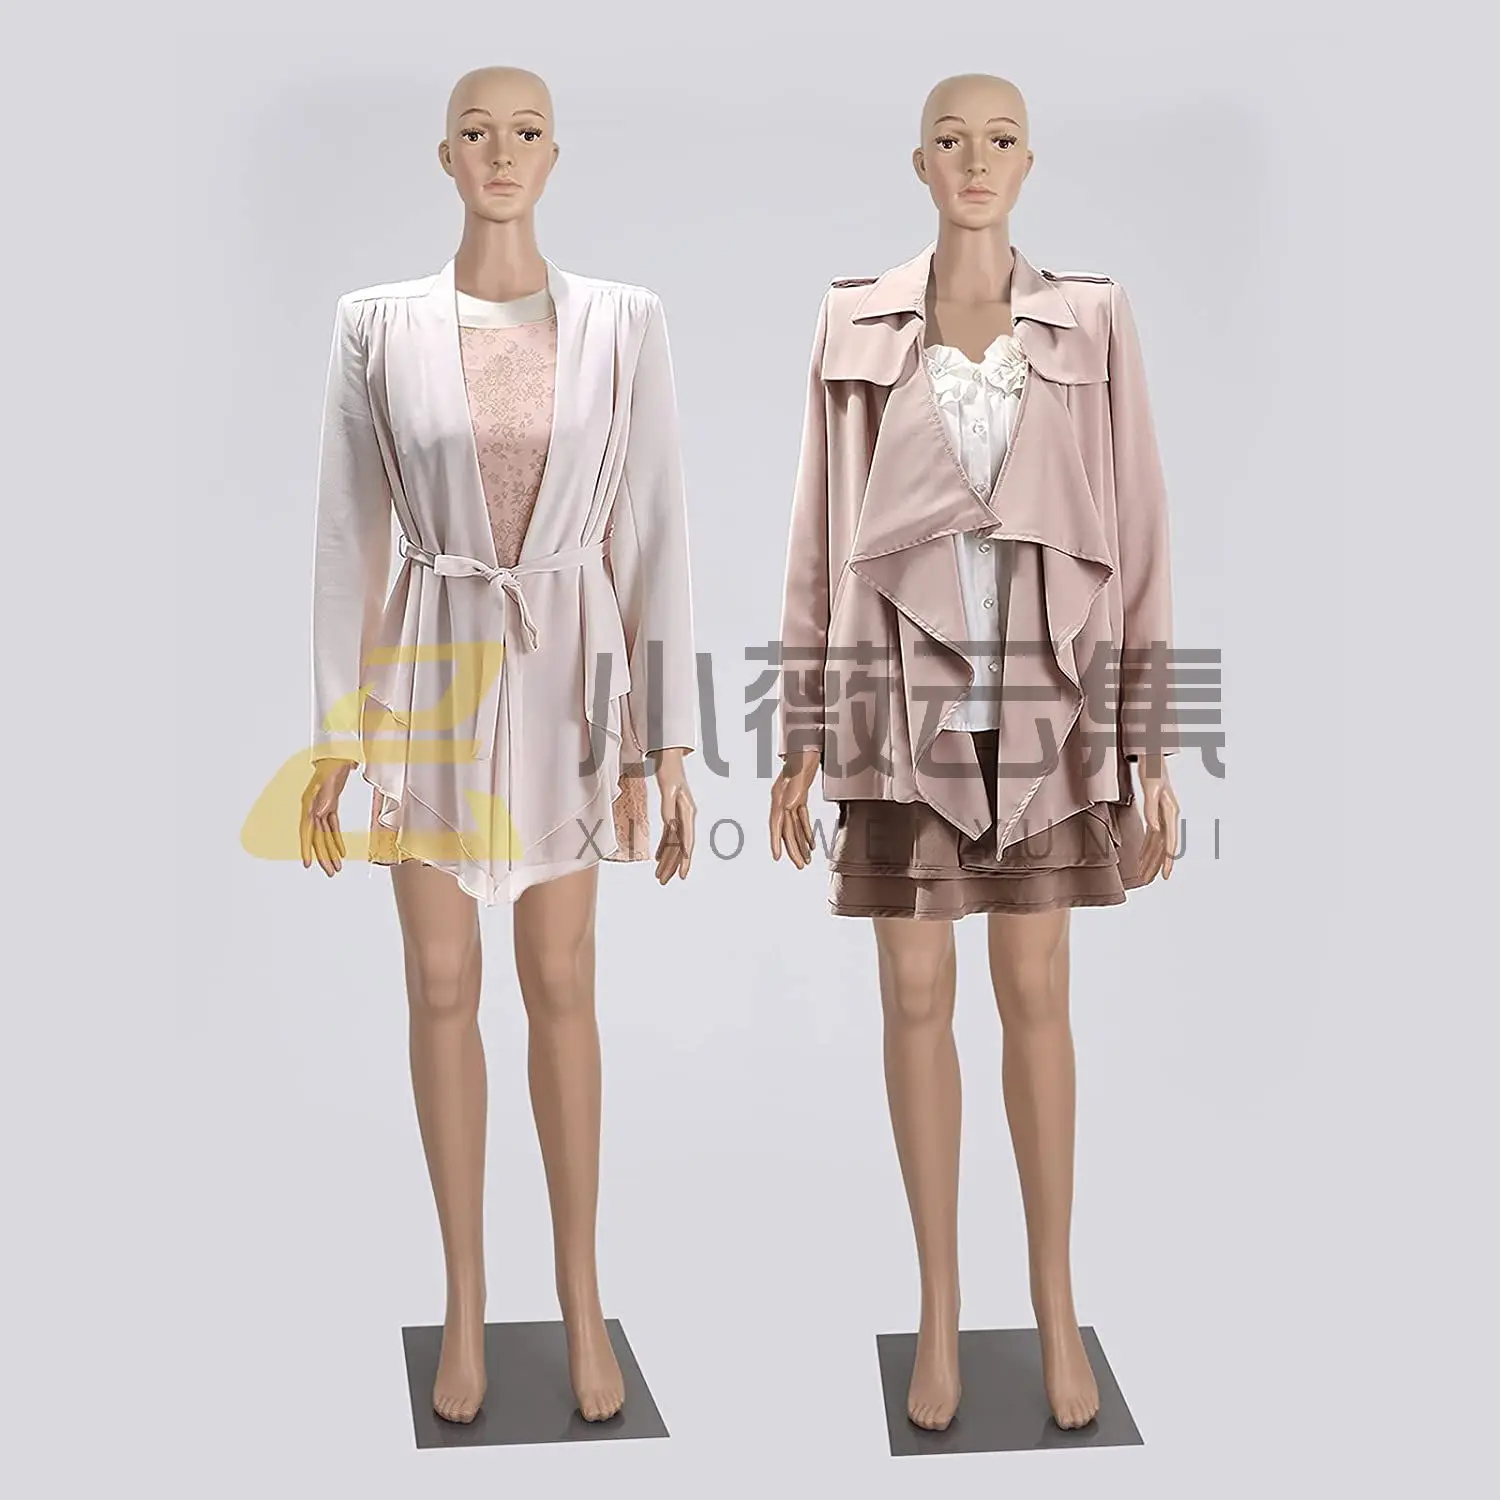 Details about   Female Mannequin Torso Dress Form Whole Body 69Inches Adjustable DIY Mannequin 